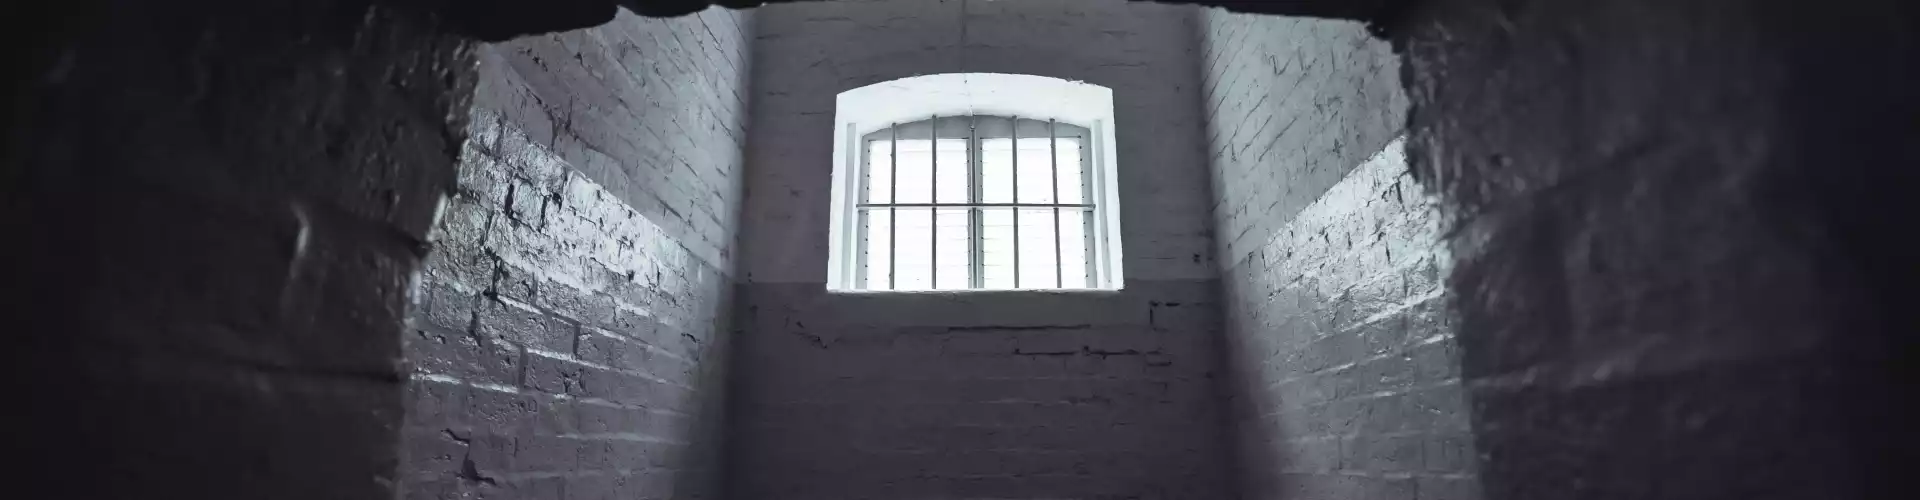 LMTV: ¡Liberen al prisionero! (Sara Jane)